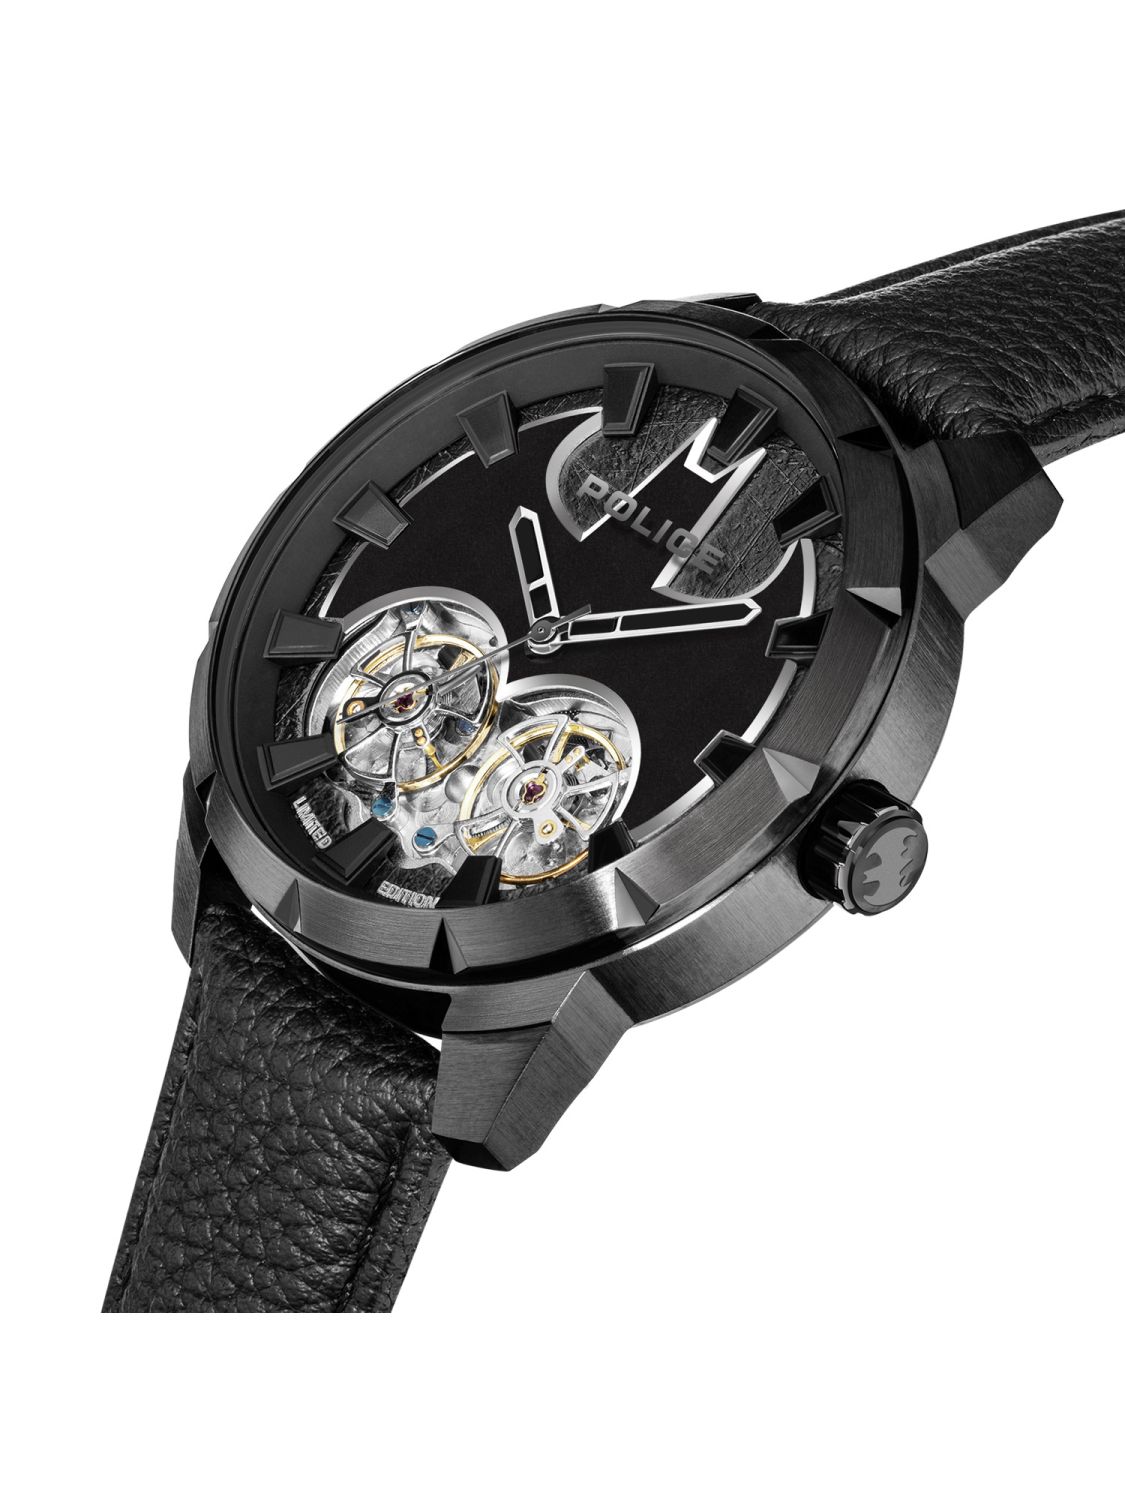 Police Wristwatch Automatic Edition Limited uhrcenter Batman Black PEWGE0022701 •